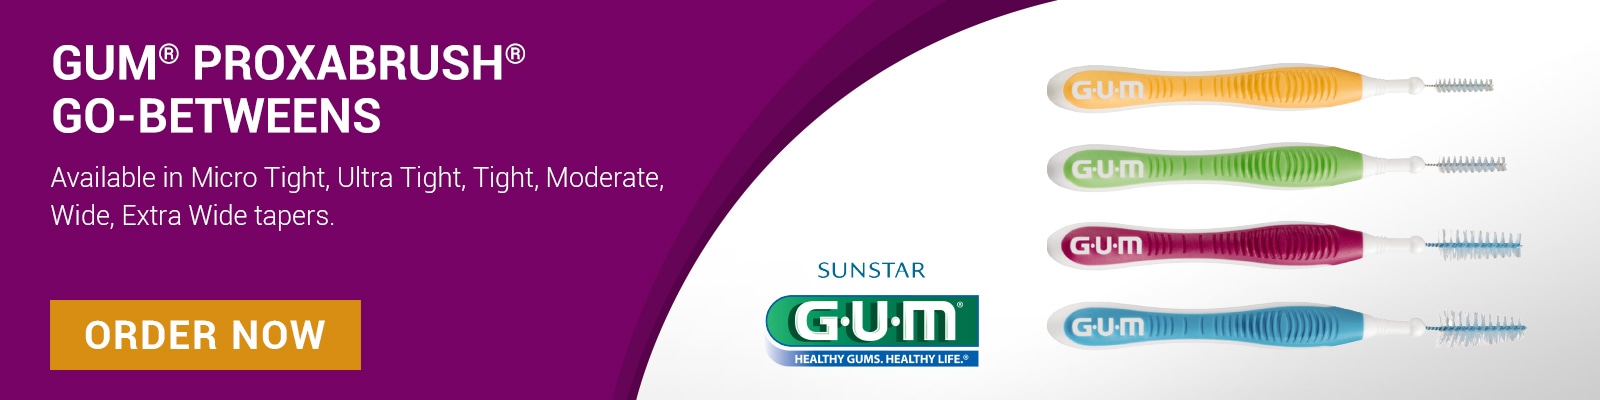 Sunstar Americas, Inc. GUM® Proxabrush® Go-Betweens Variety Pack